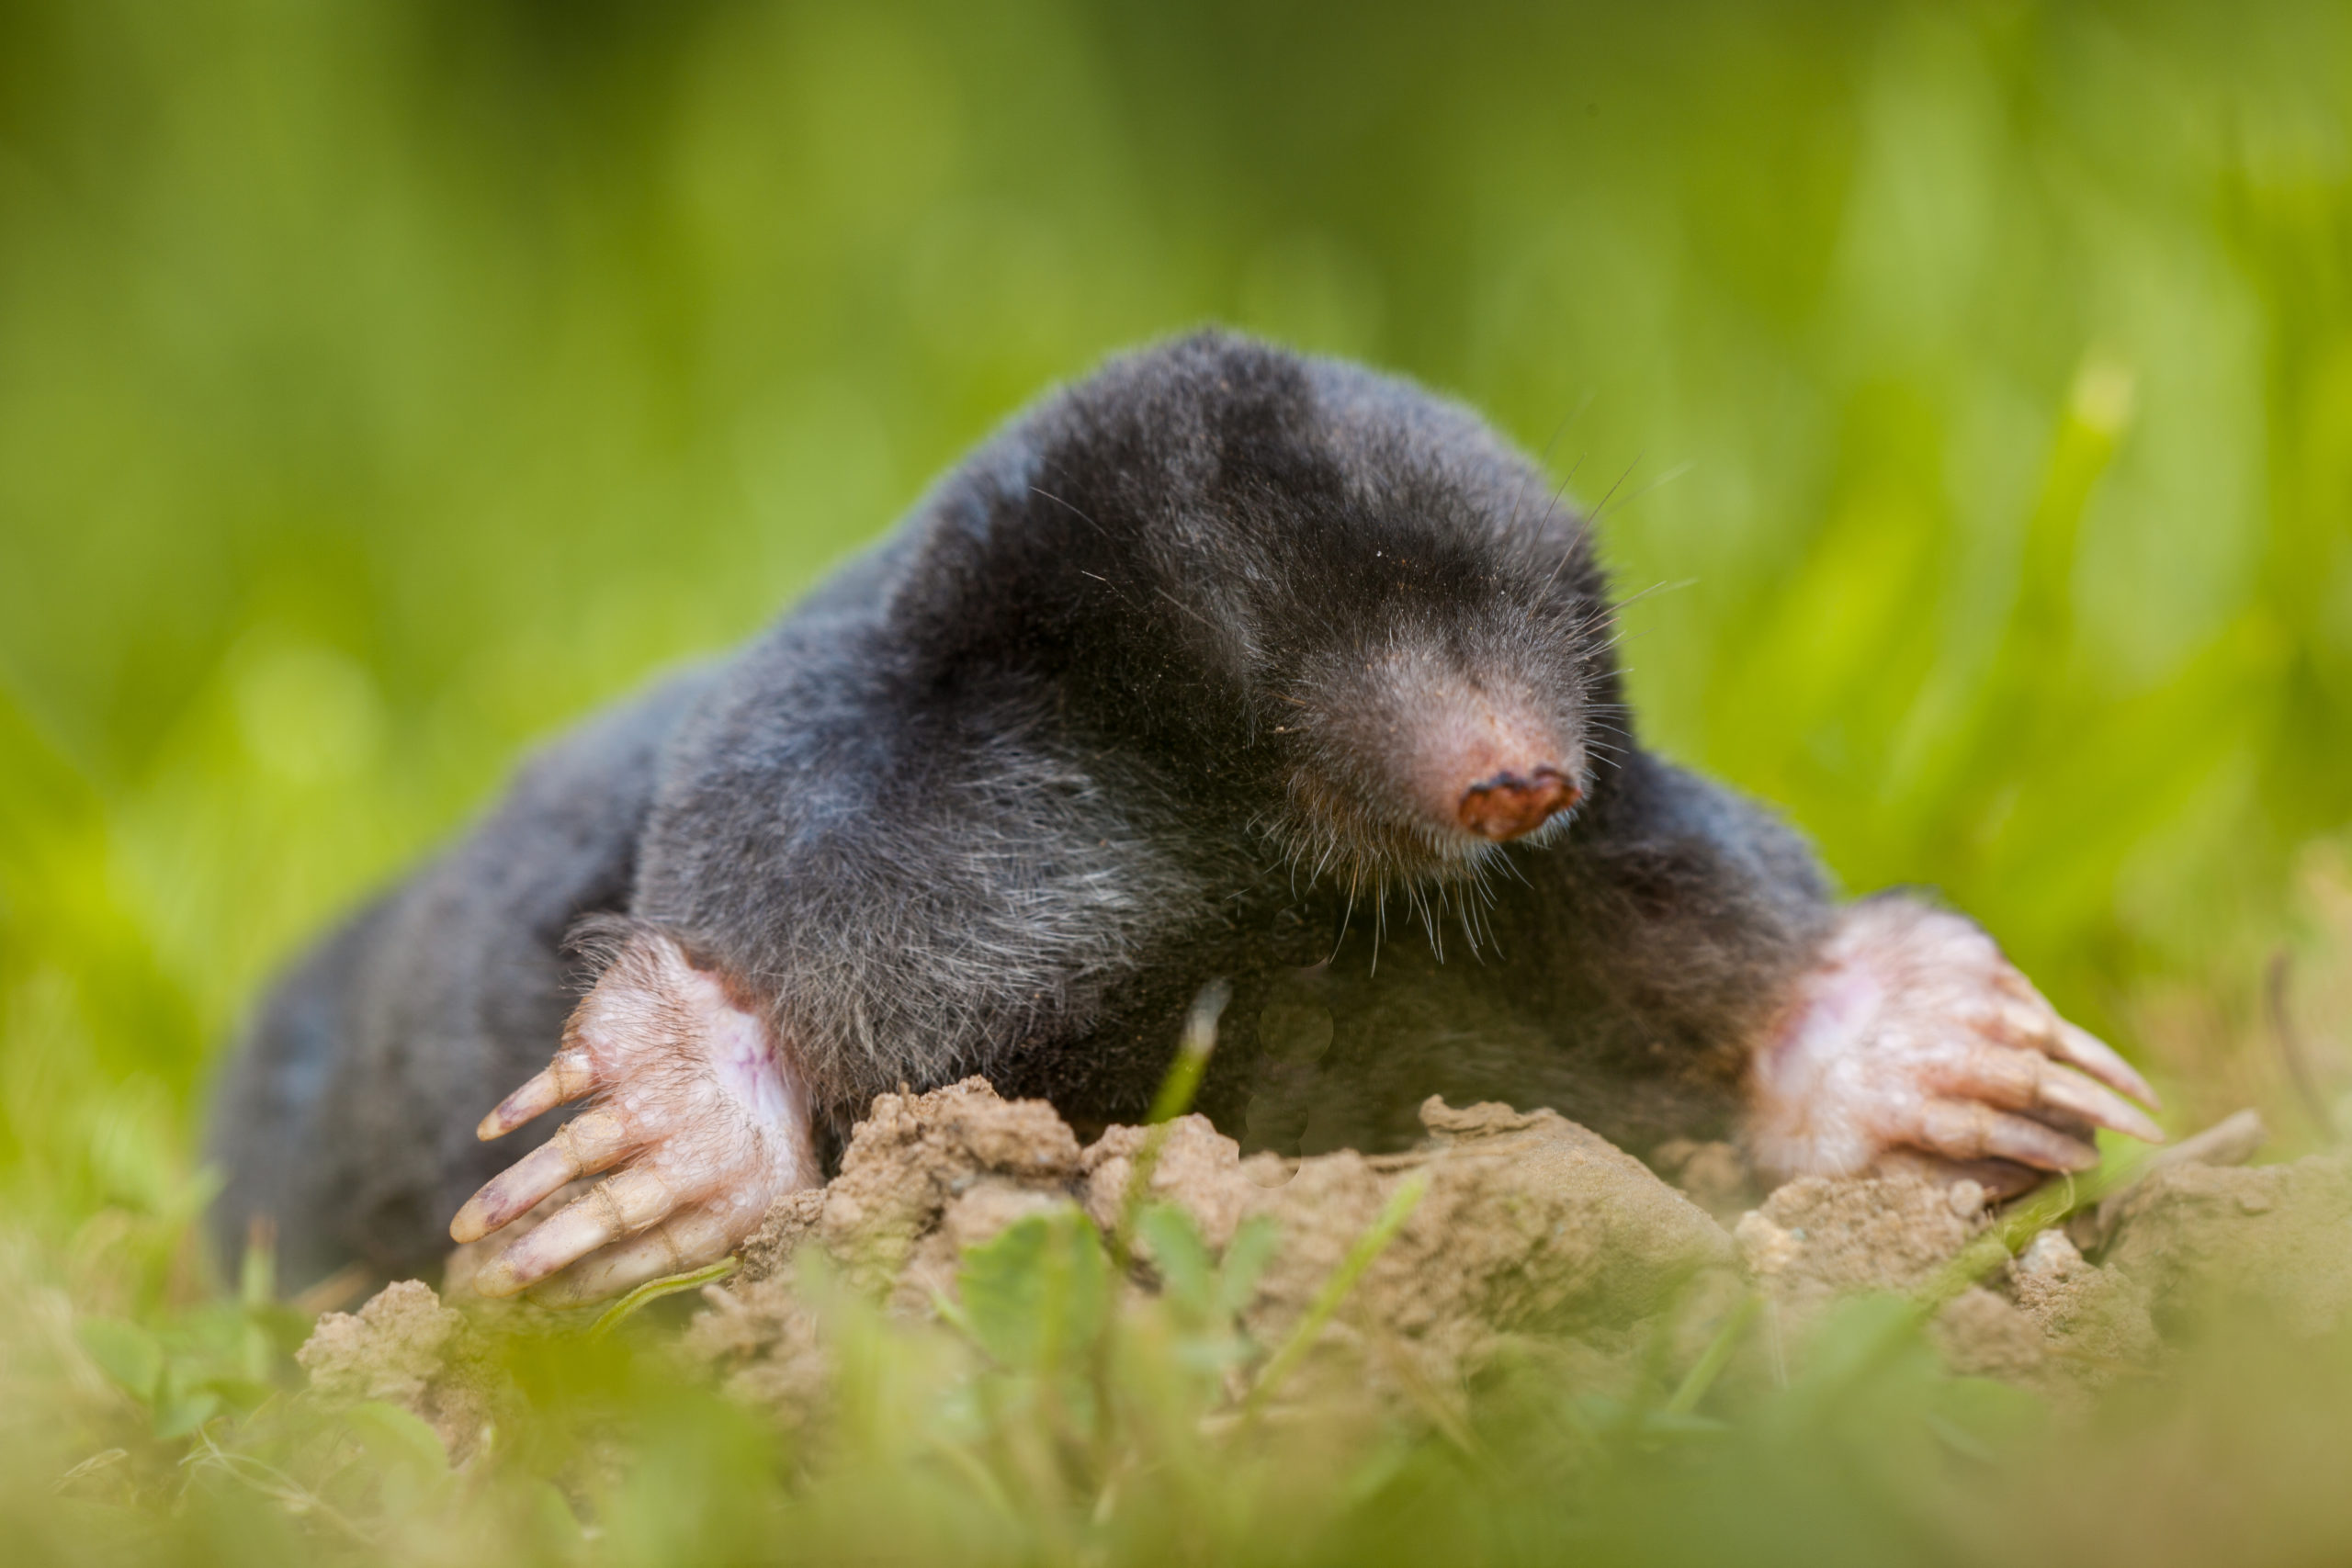 Picture of nuisance mole in MI habitat